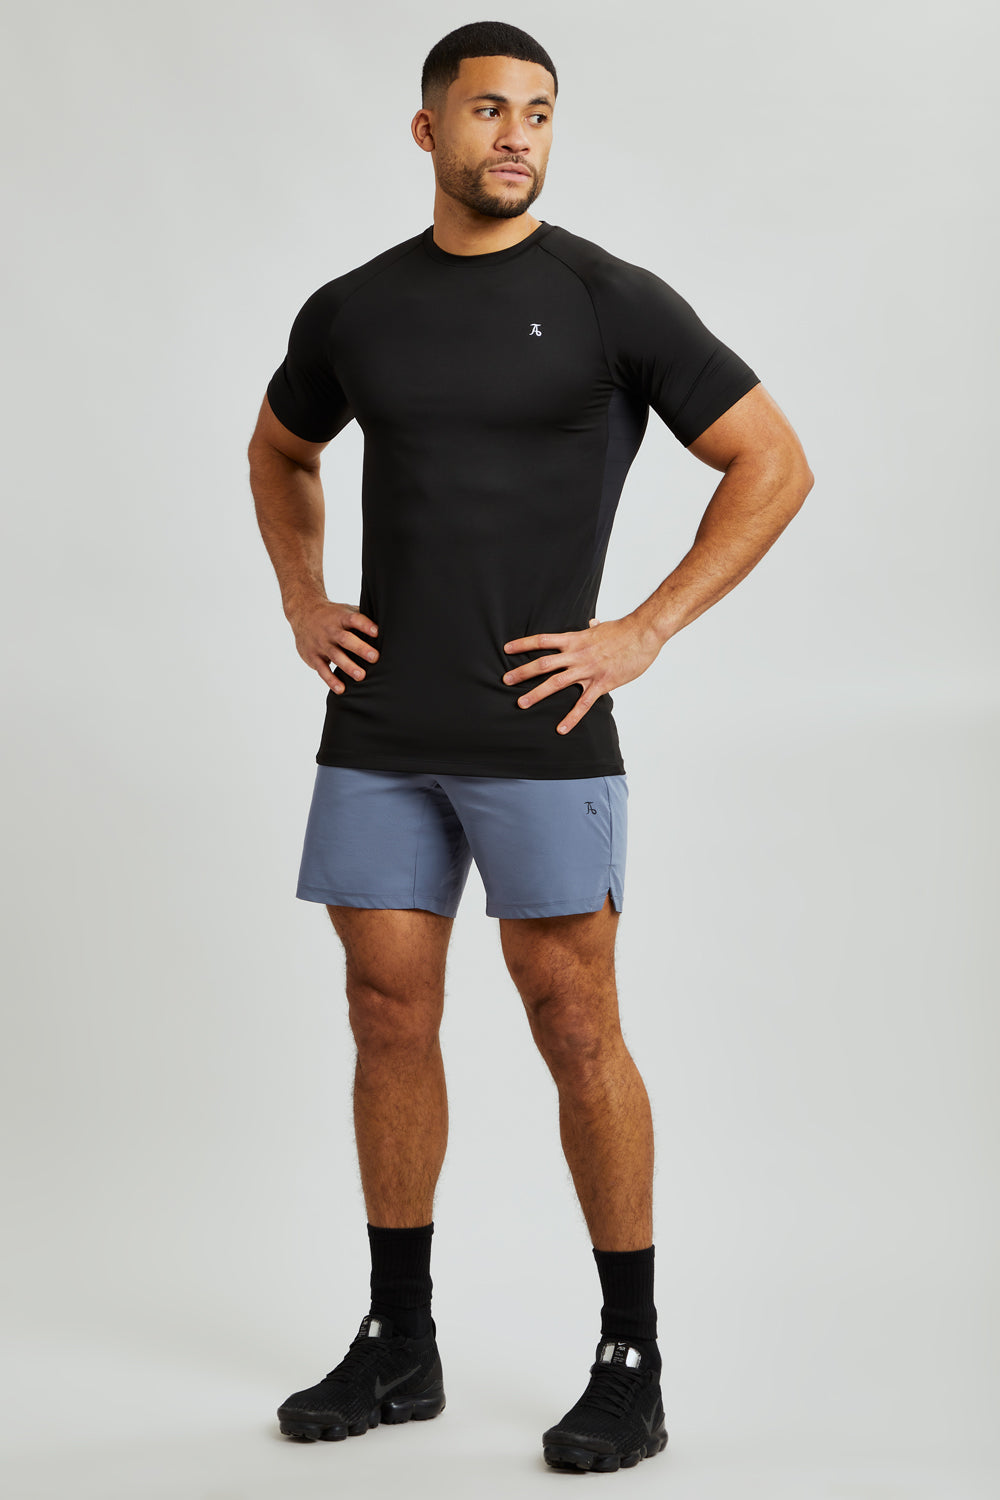 Training Shorts in Slate Grey/Black - TAILORED ATHLETE - ROW